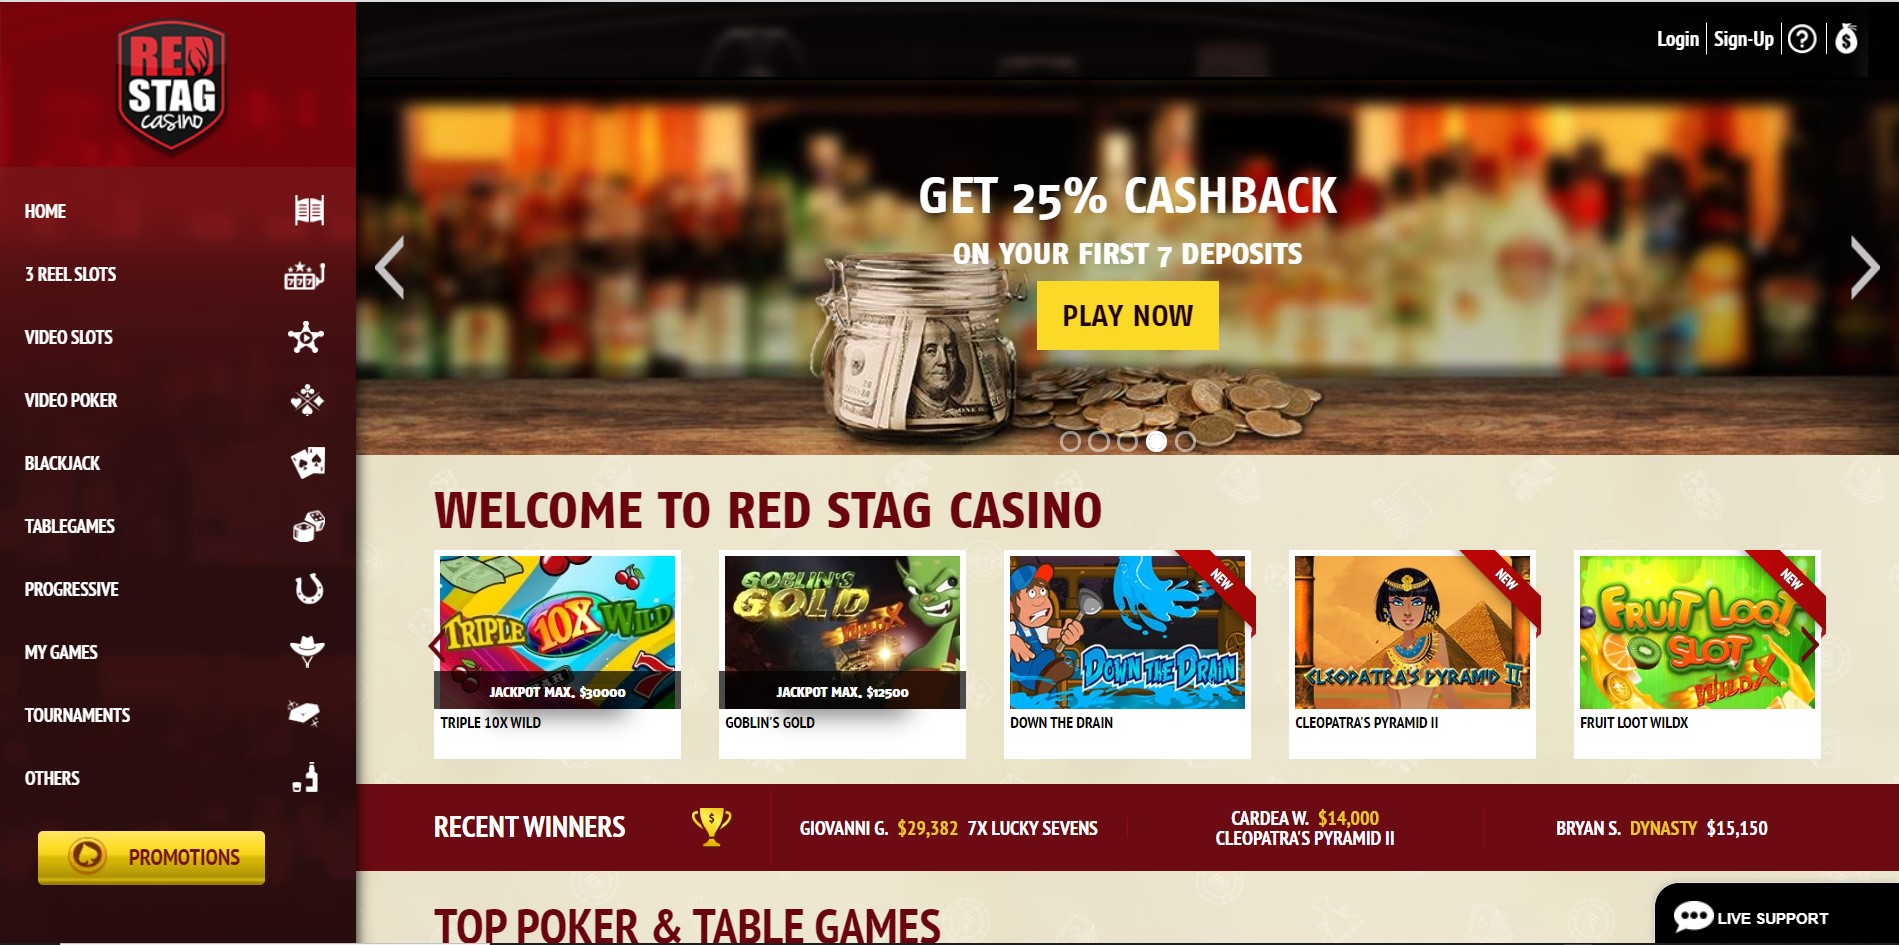 Red Stag Casino Cashback Bonus